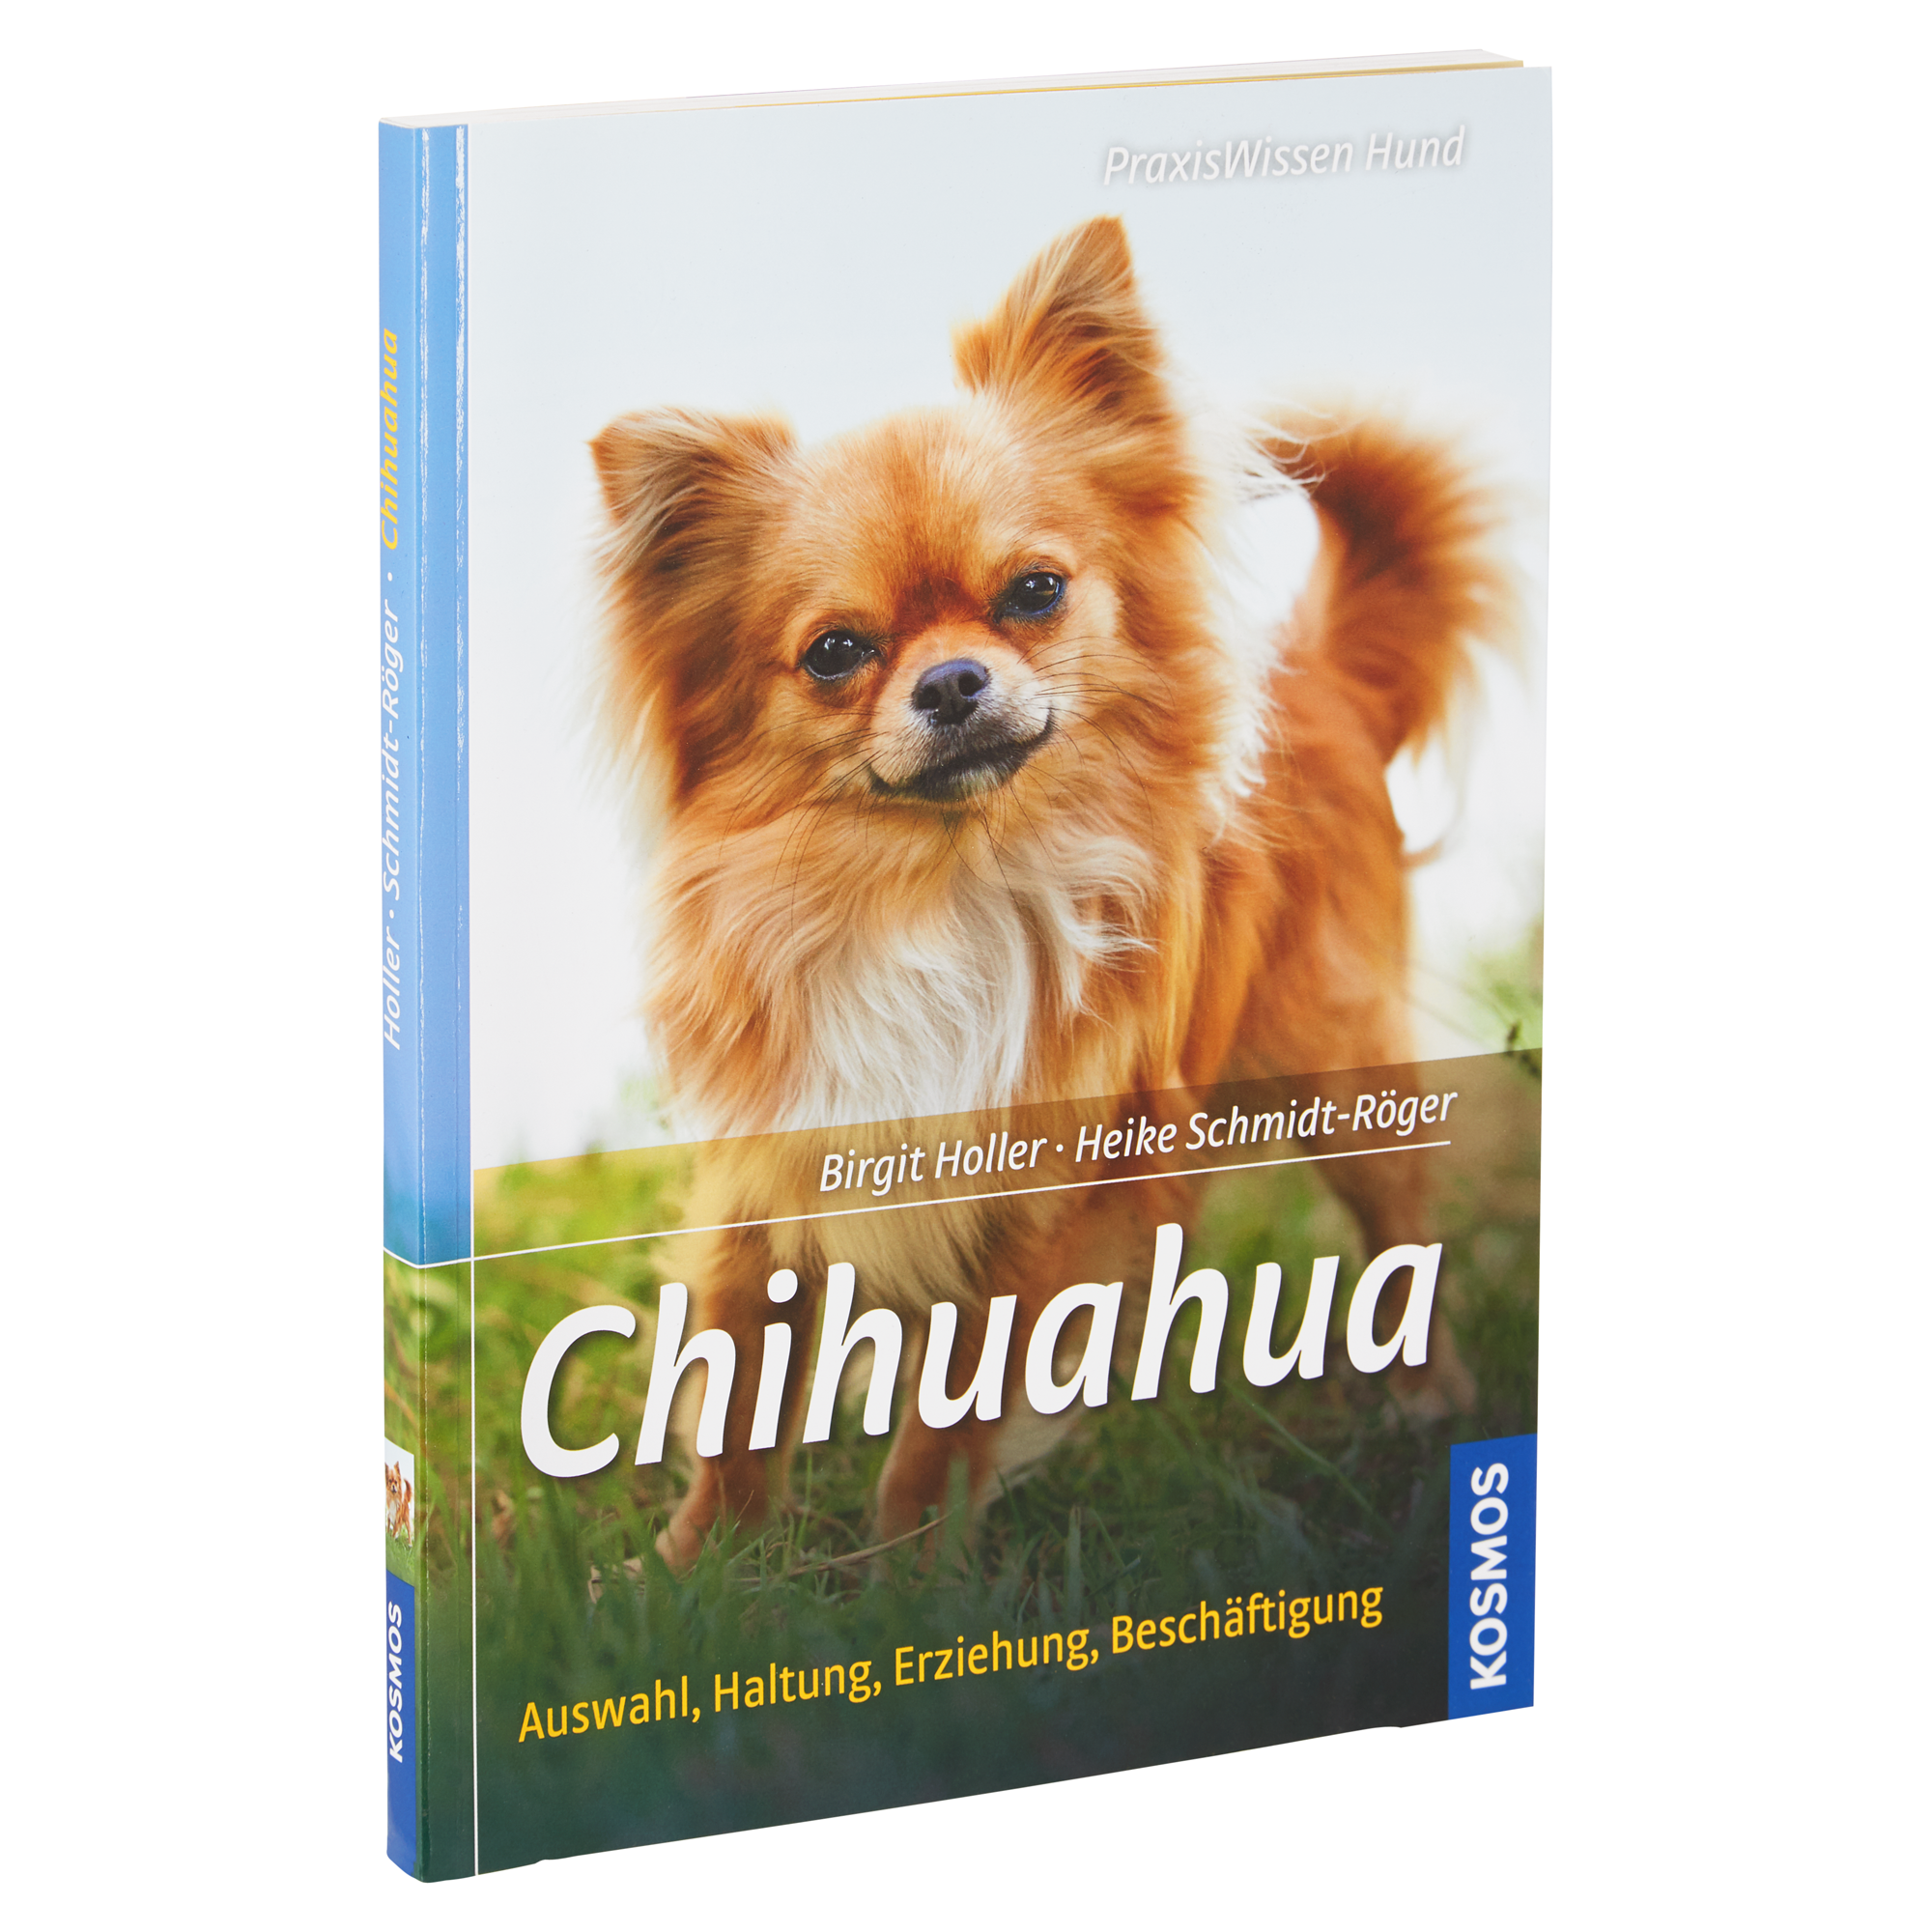 Kosmos-Tierratgeber "Chihuahua: Auswahl, Haltung, Erziehung, Beschäftigung" PB 128 S. + product picture